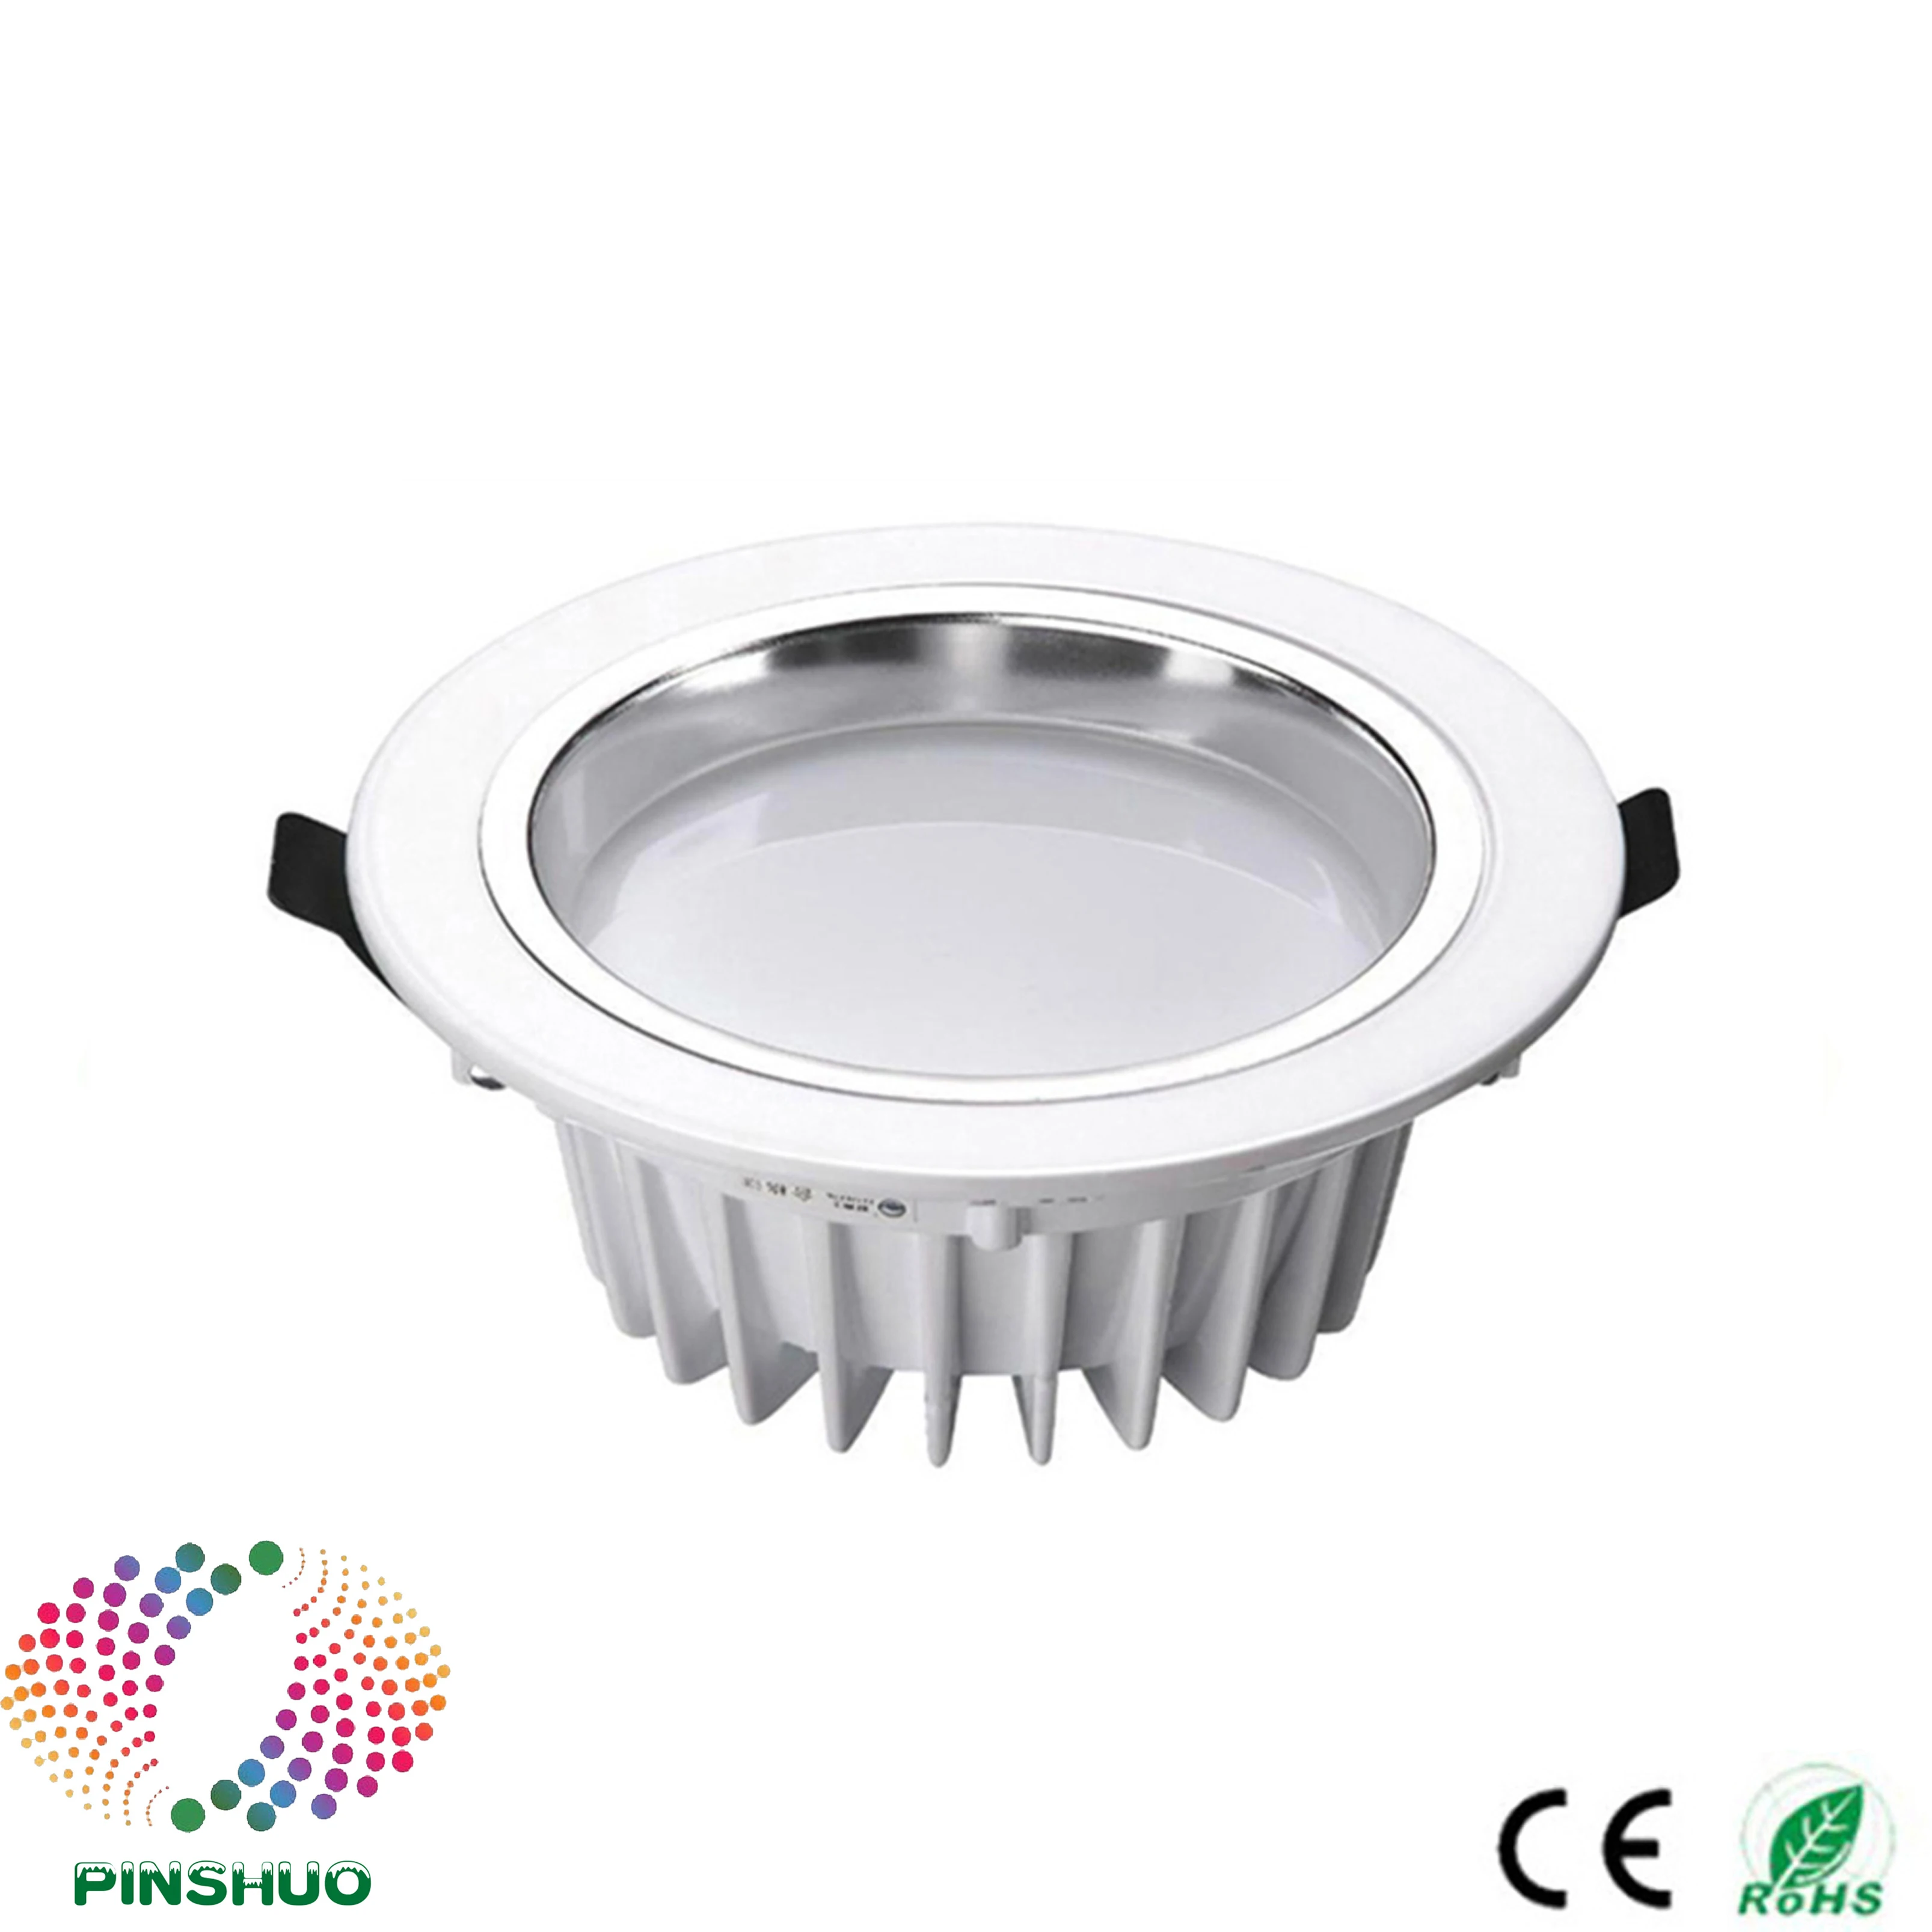 

10PCS Dimmable LED Downlight Down Light 7W COB Recessed Ceiling Spotlight Spot Bulb Waterproof IP68 3 Years Warranty